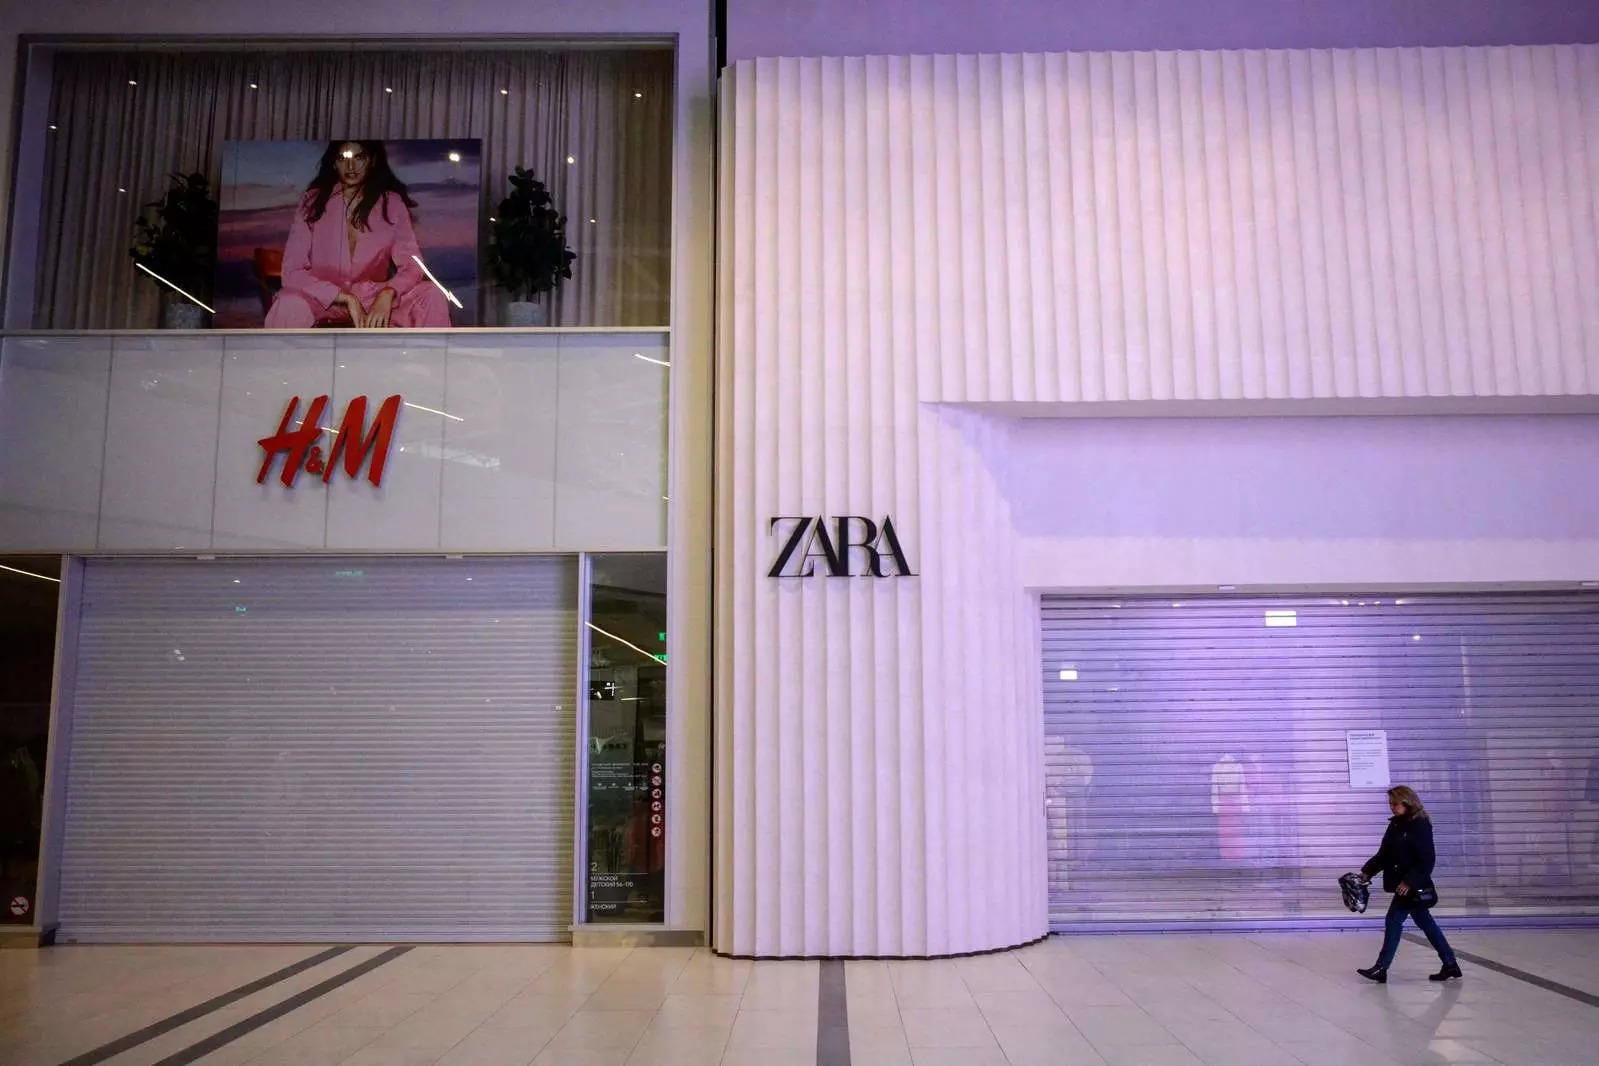 Zara owner Inditex seen outshining H&M in fast-fashion showdown